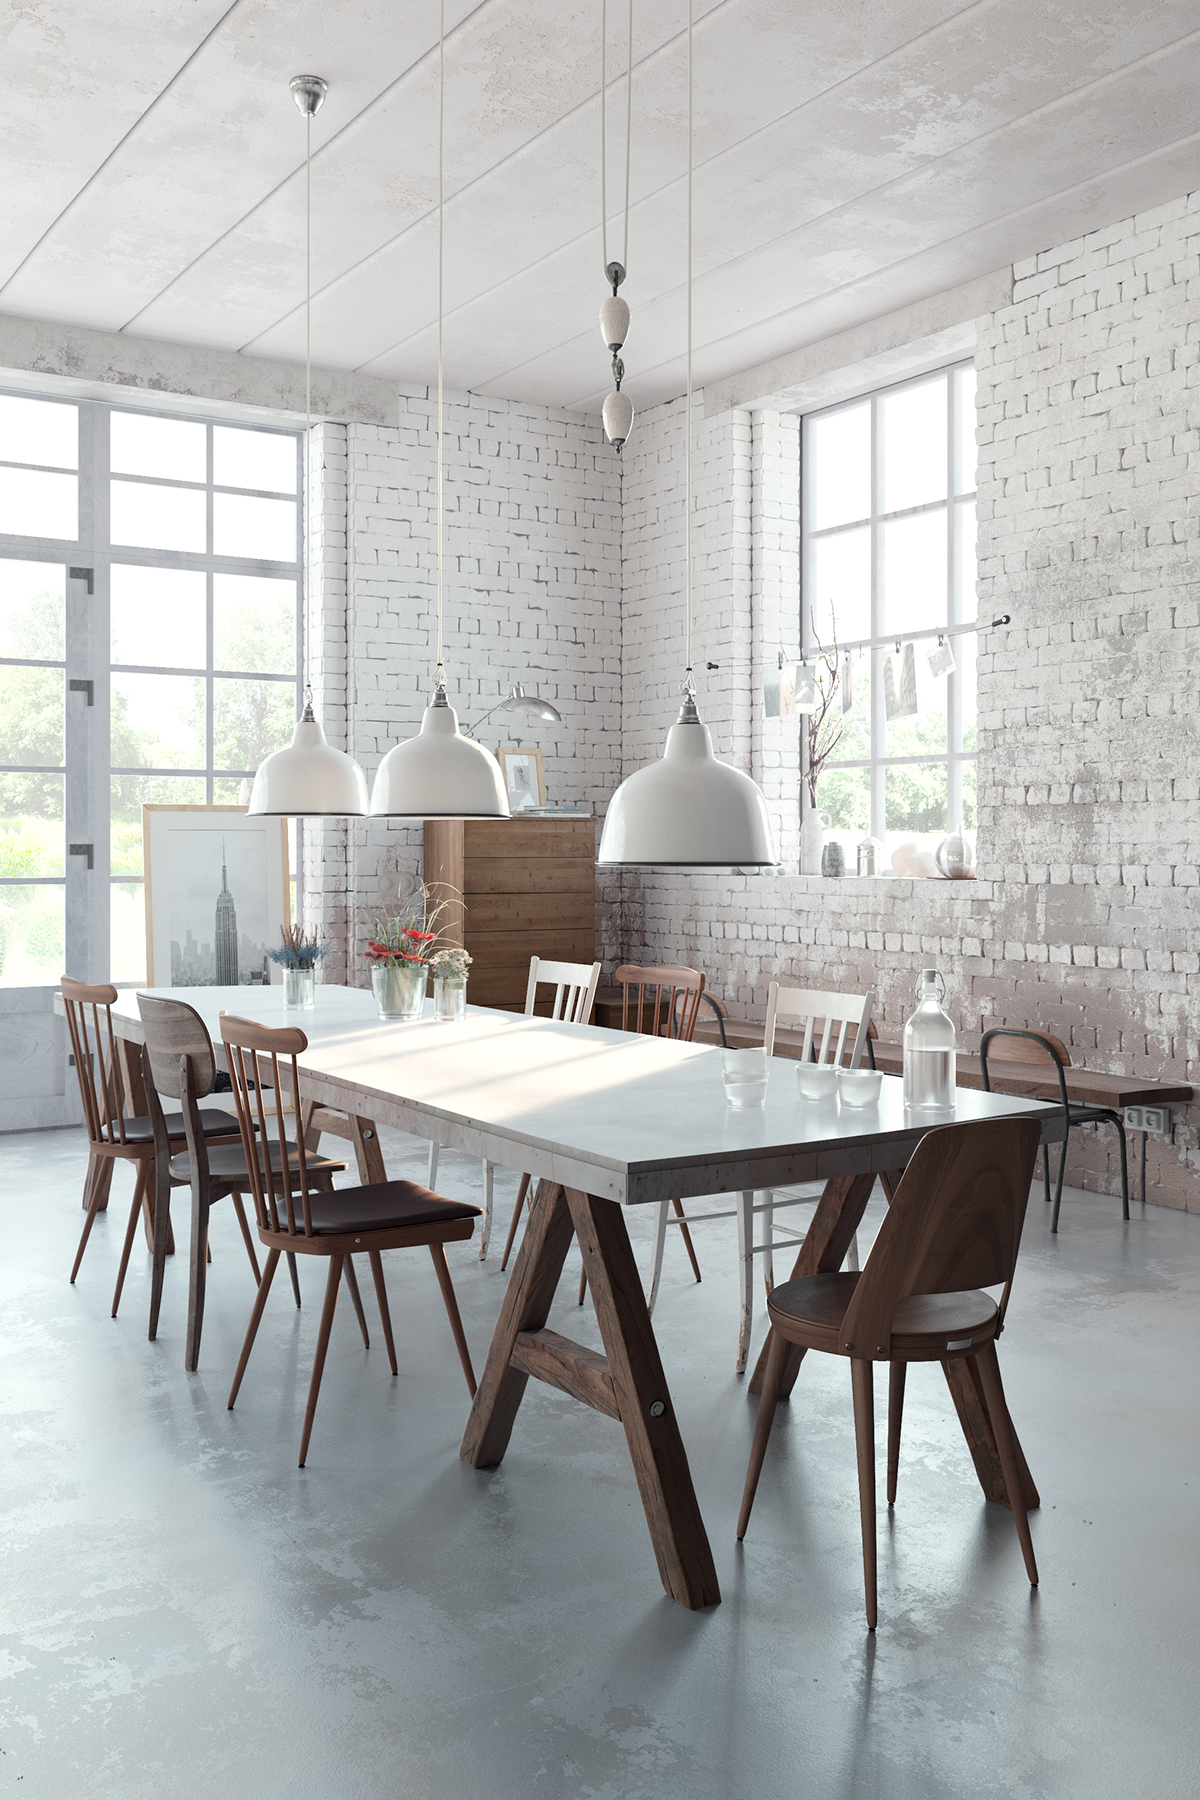 архитектура цифровое искусство дизайн интерьера Interior design LOFT kitchen brick corona 3dsmax CG photorealistic